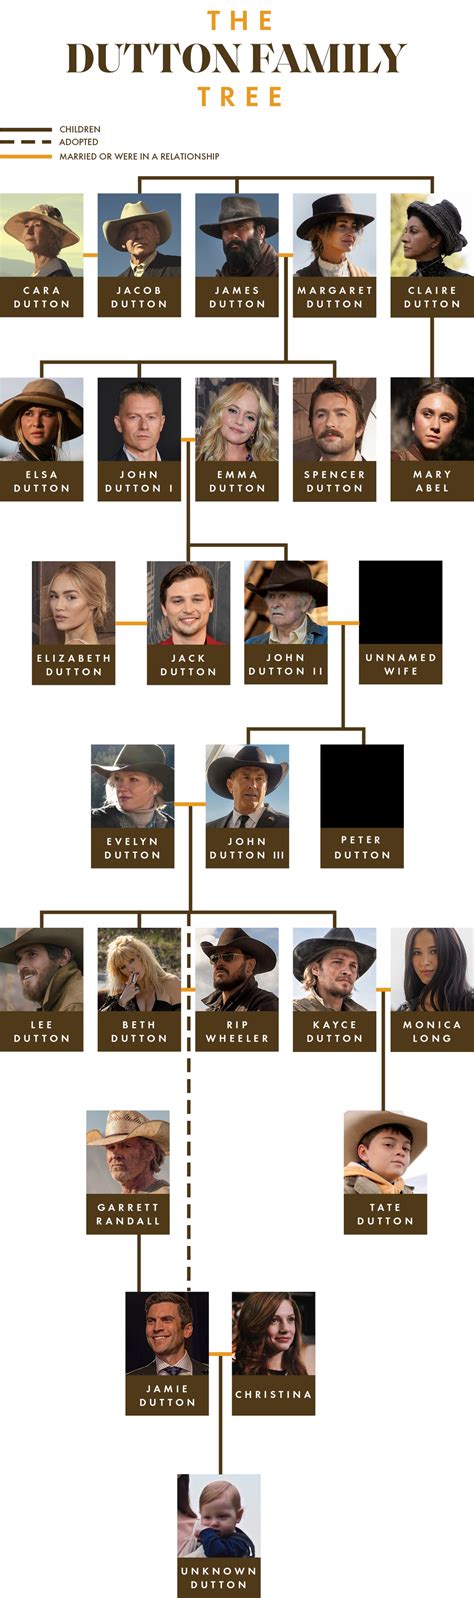 yellowstone series family tree